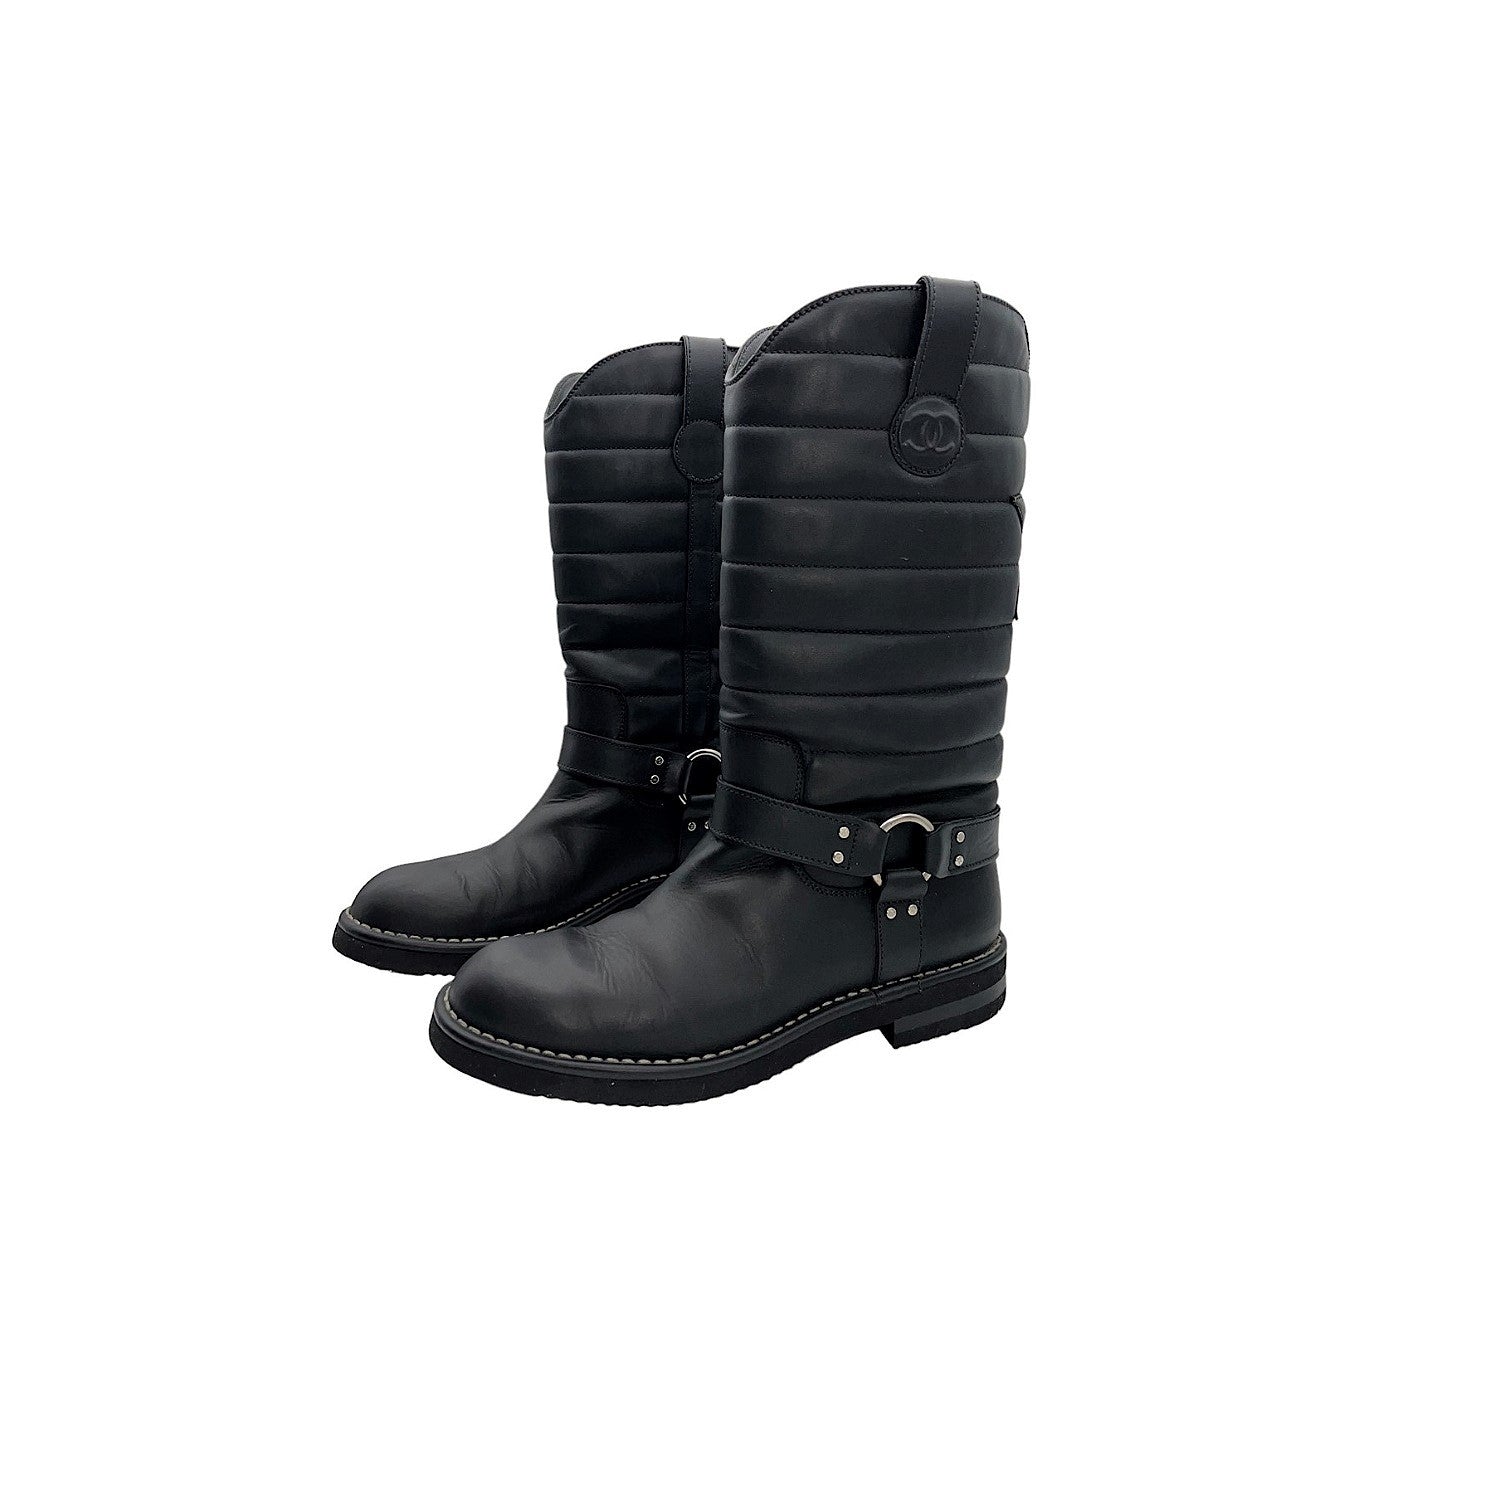 Leather biker boots Louis Vuitton Black size 37 EU in Leather